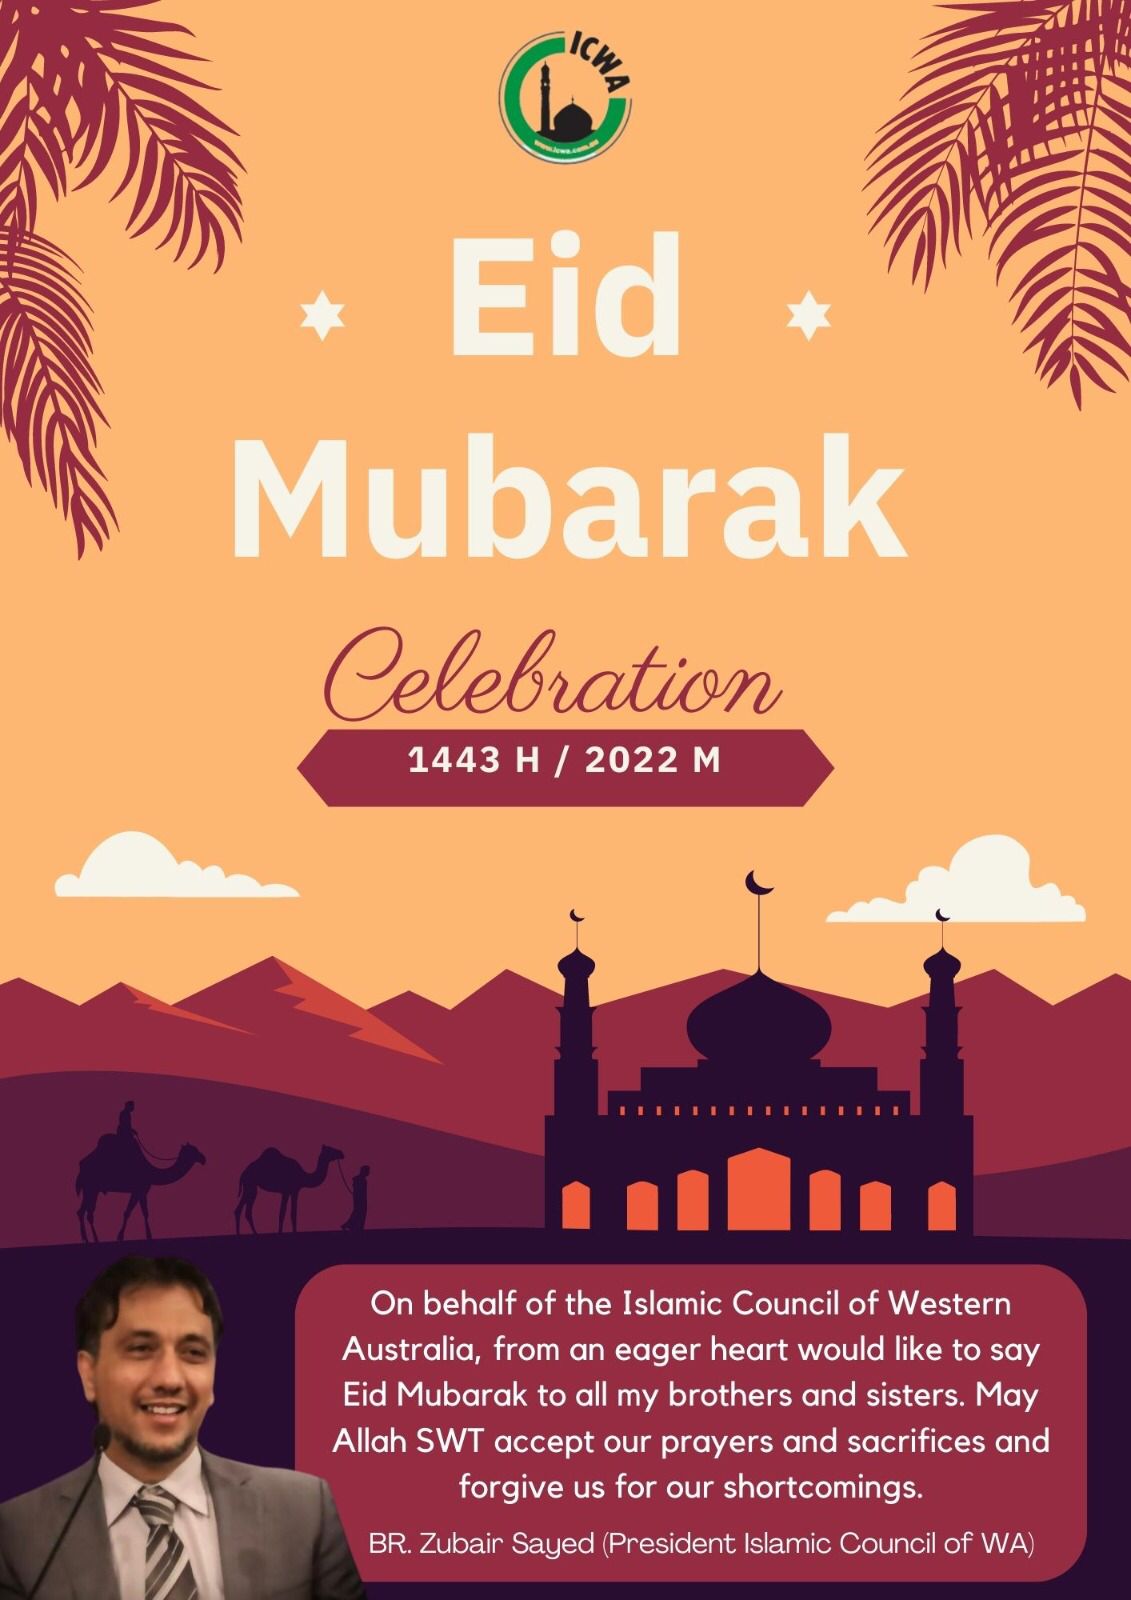 Eid Mubarak wishes from ICWA